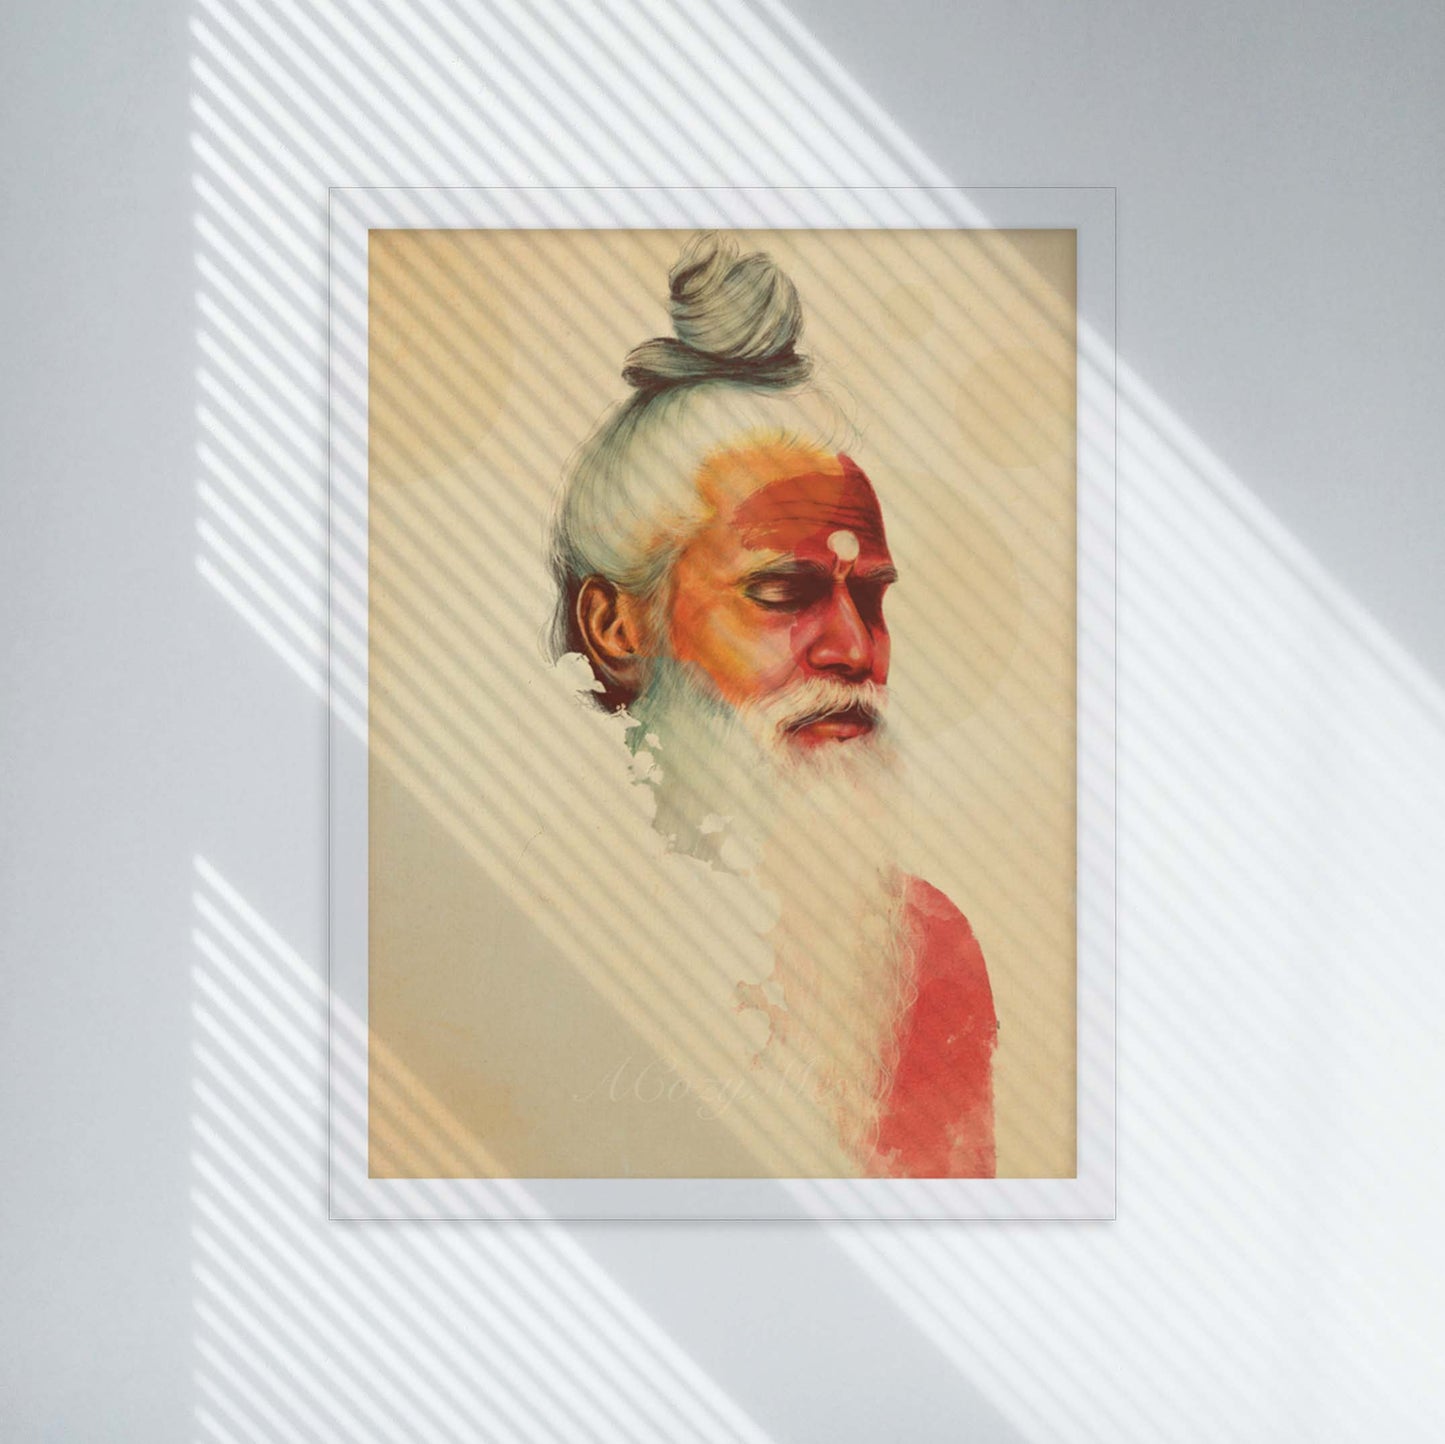 Indian holy man in meditation portrait in beige, orange & yellow palette, wall art in white frame